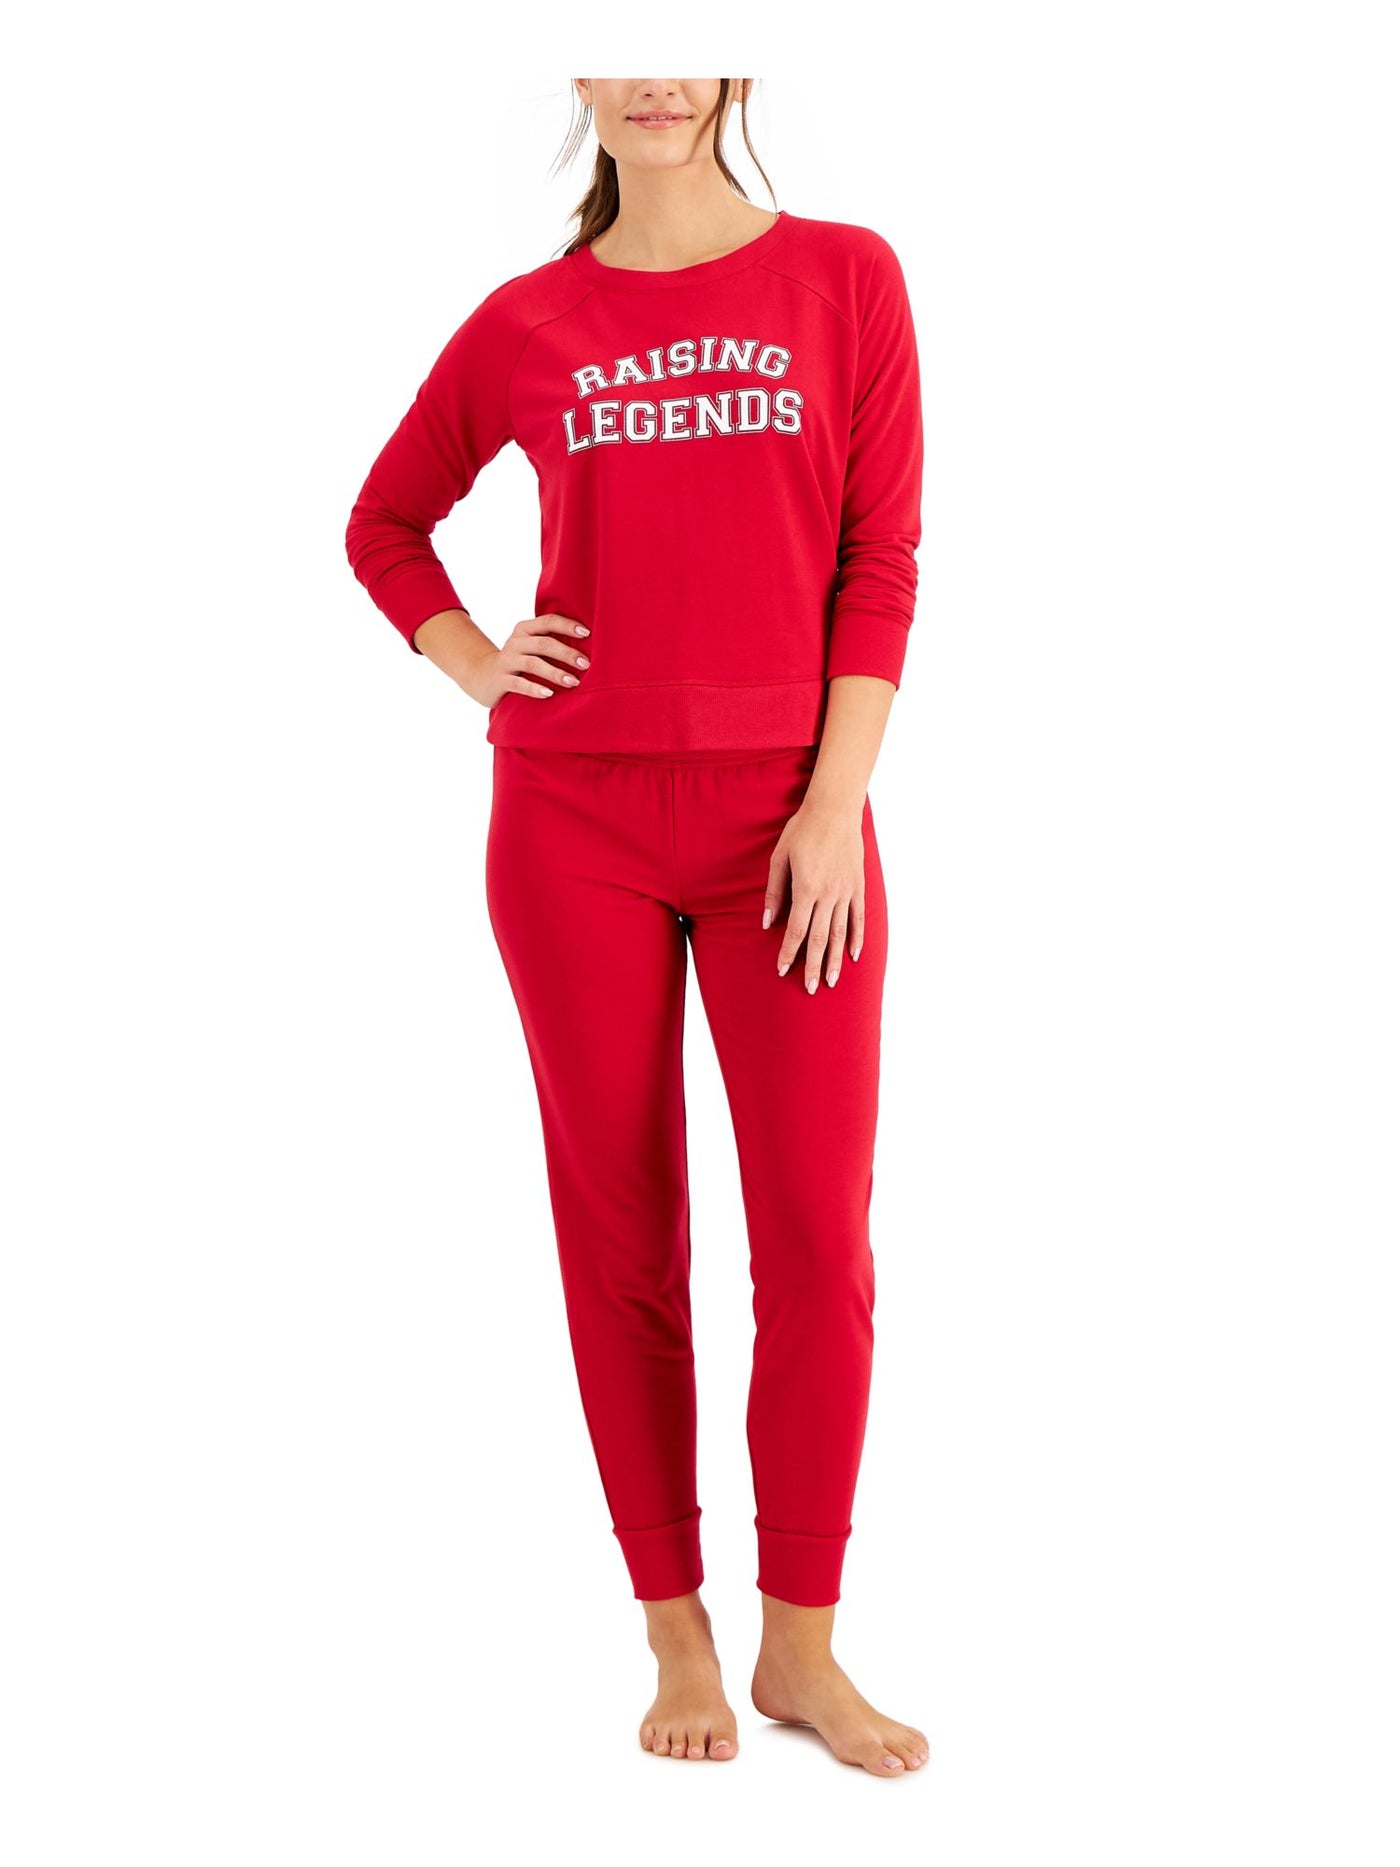 FAMILY PJs Womens Red Printed Top Elastic Band Long Sleeve Lounge Pants Pajamas XL